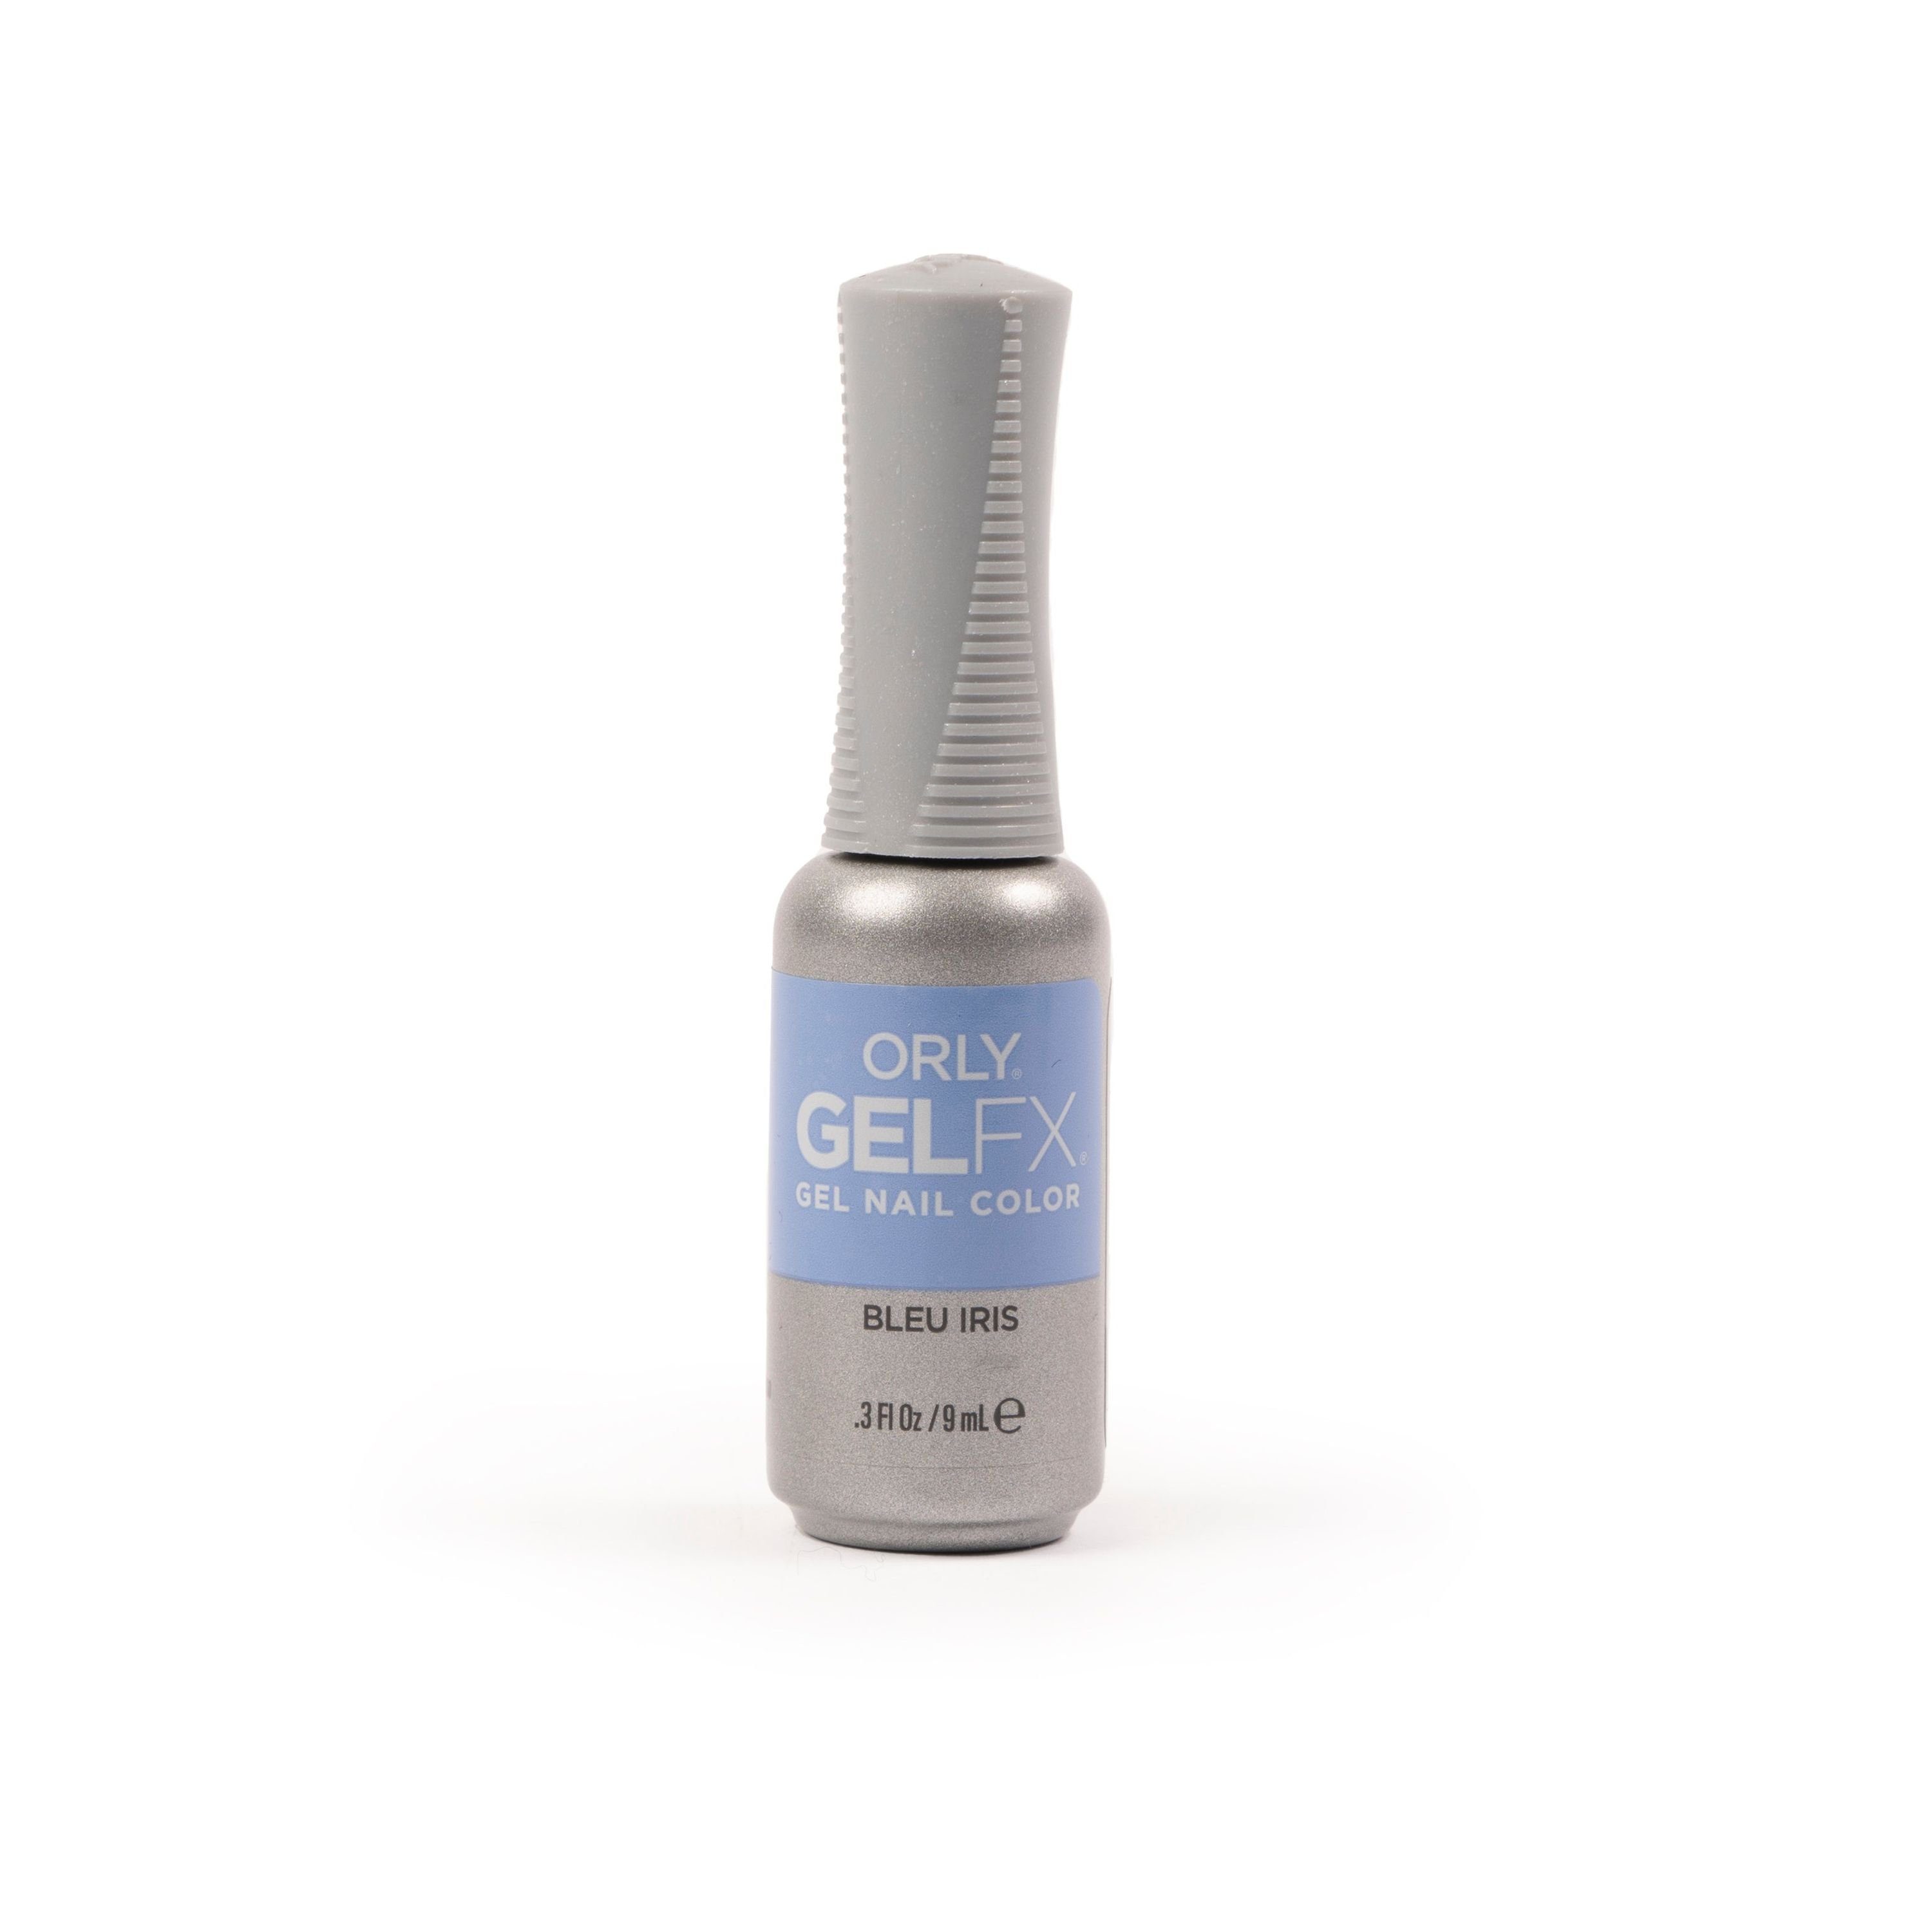 ORLY UV-Nagellack GEL FX Bleu Iris | Nagellacke